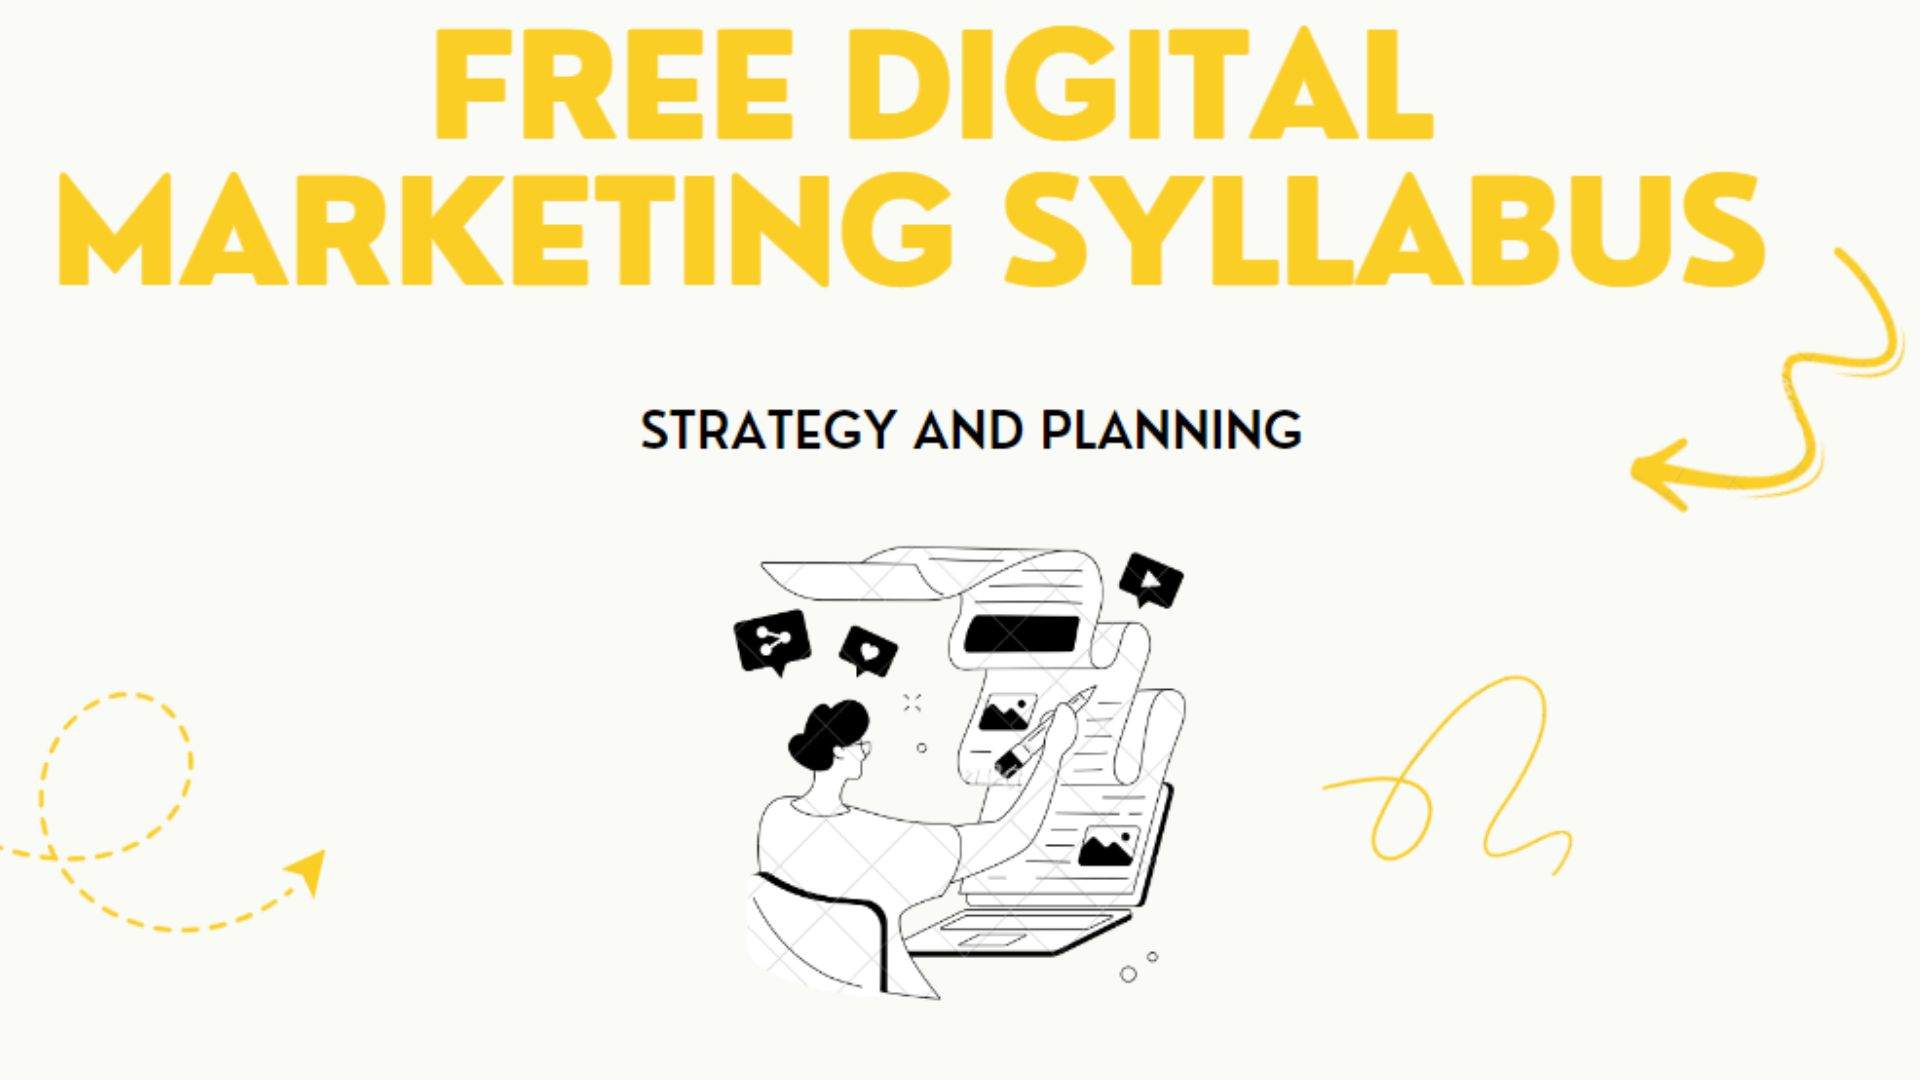 Grab free Digital marketing syllabus PDF now